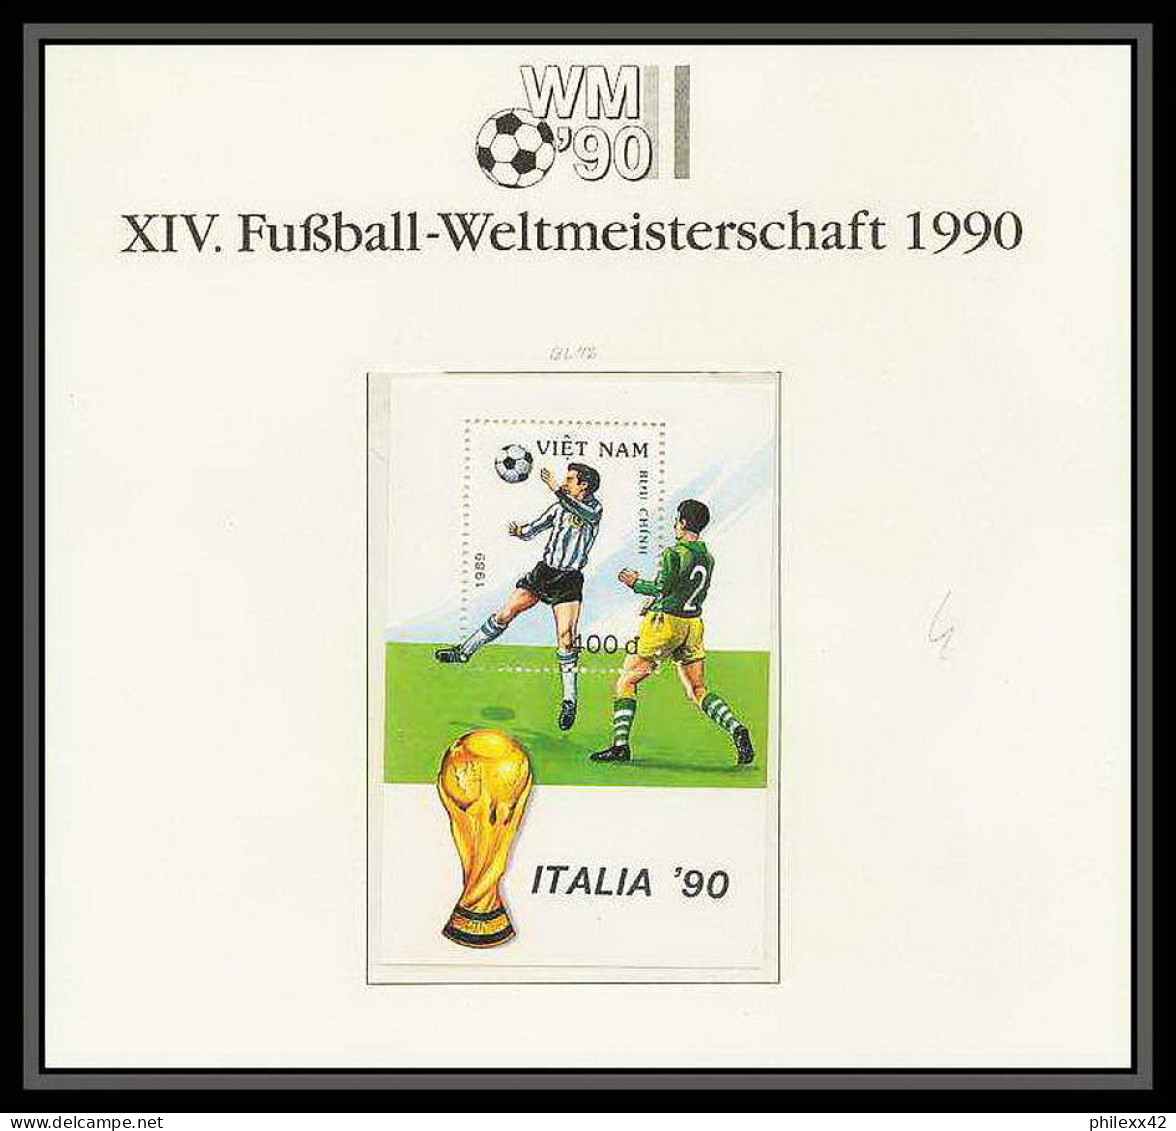 019 Football (Soccer) Italia 90 Neuf ** MNH - Block 76 + Serie Viet Nam (Vietnam) - 1990 – Italien